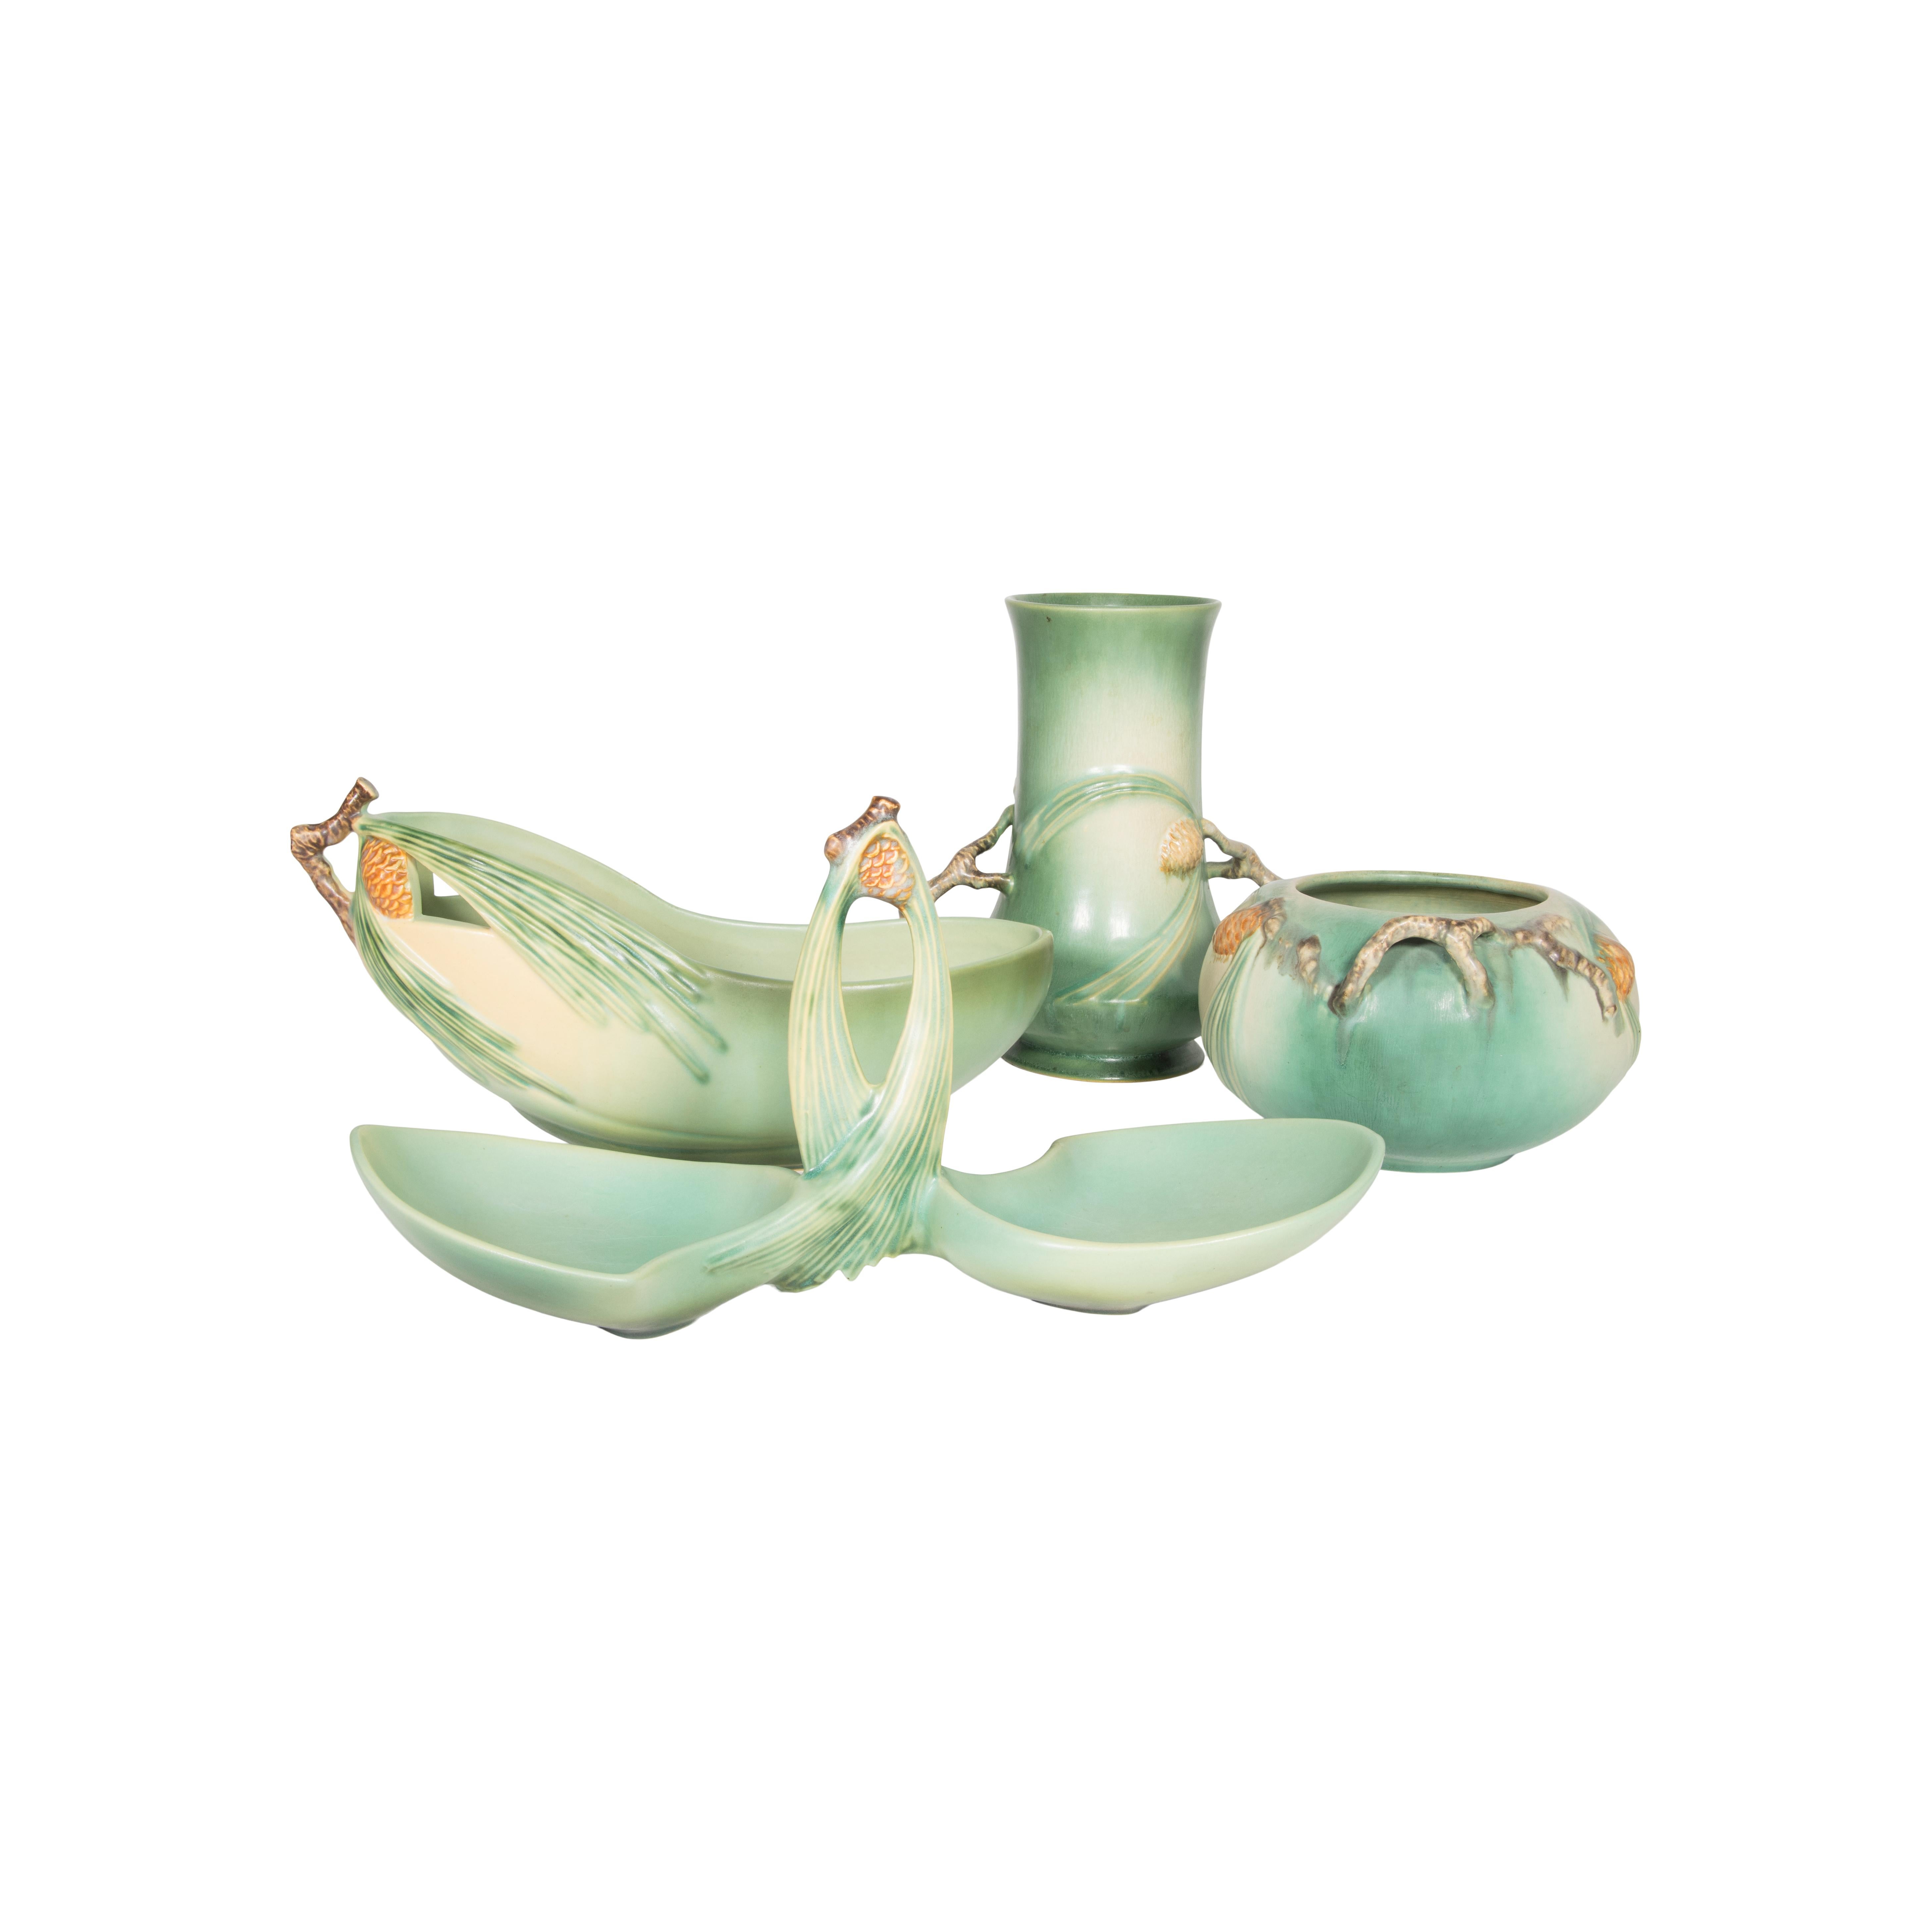 Collection of green Roseville Pinecone pottery. Fünfzehn Stücke, darunter: Vase 748-6, Schale 278-4, Vase 745-7, 9